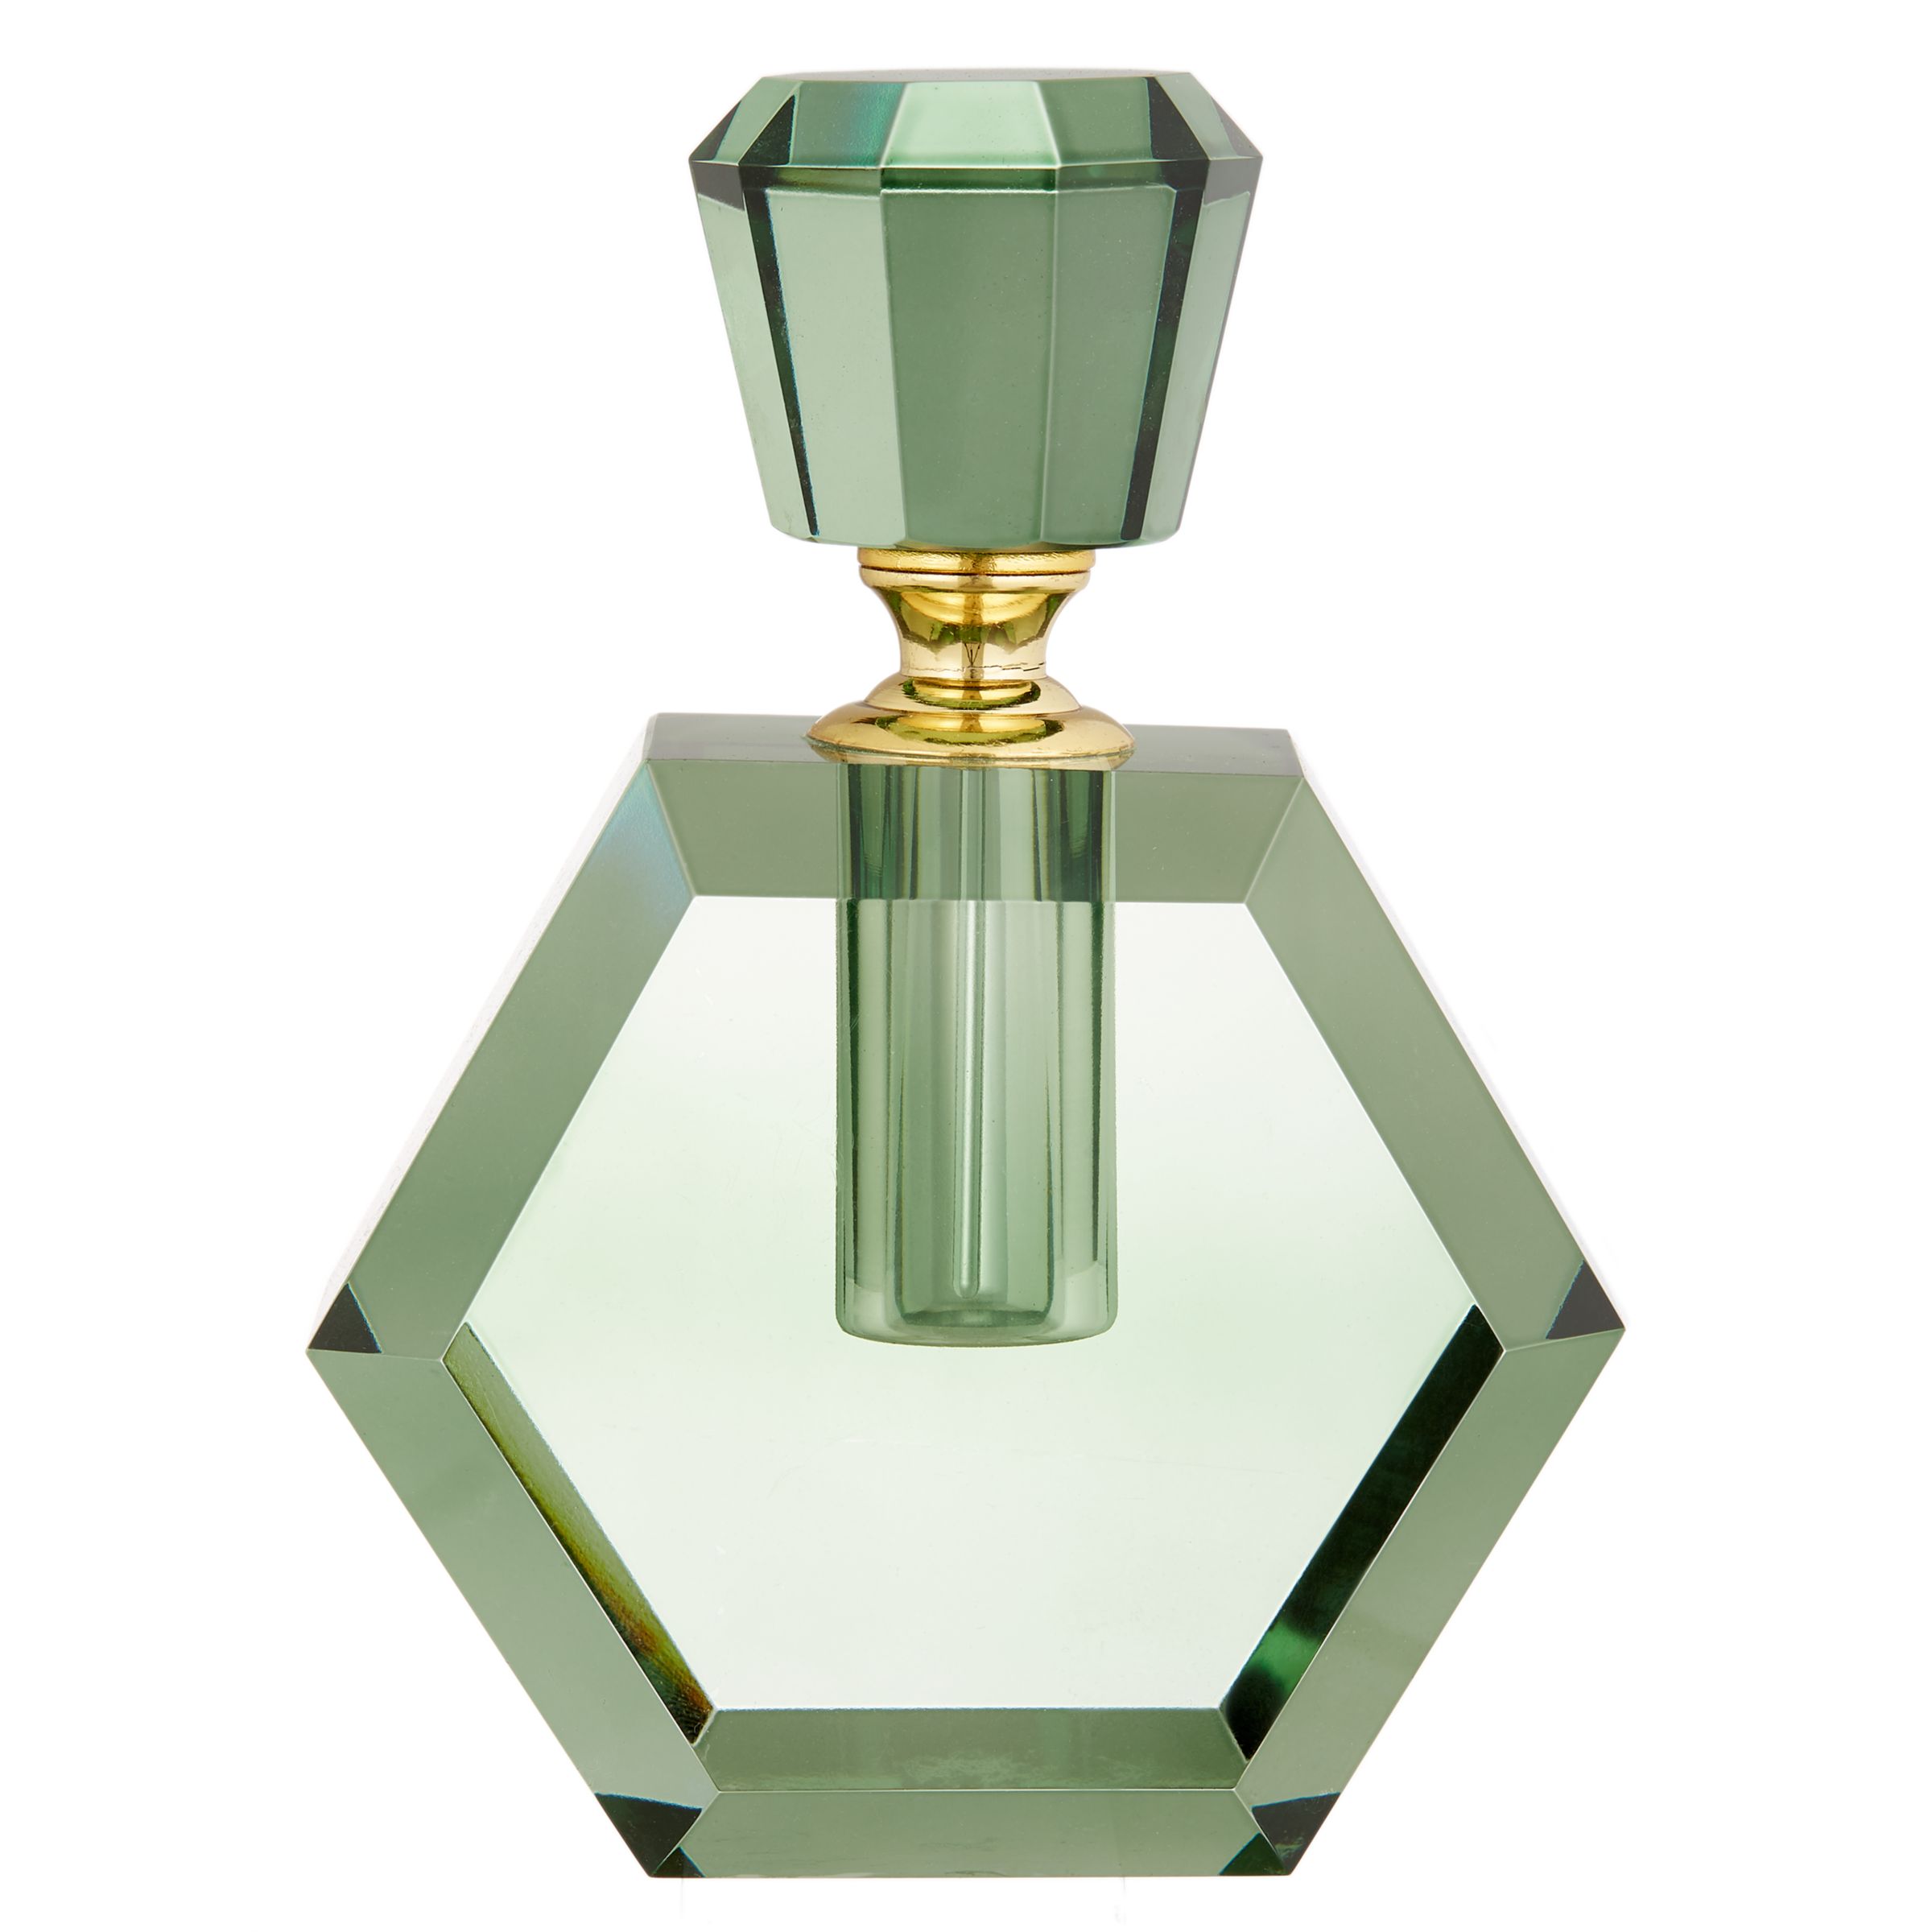 John Lewis & Partners Perfume Bottle, Green